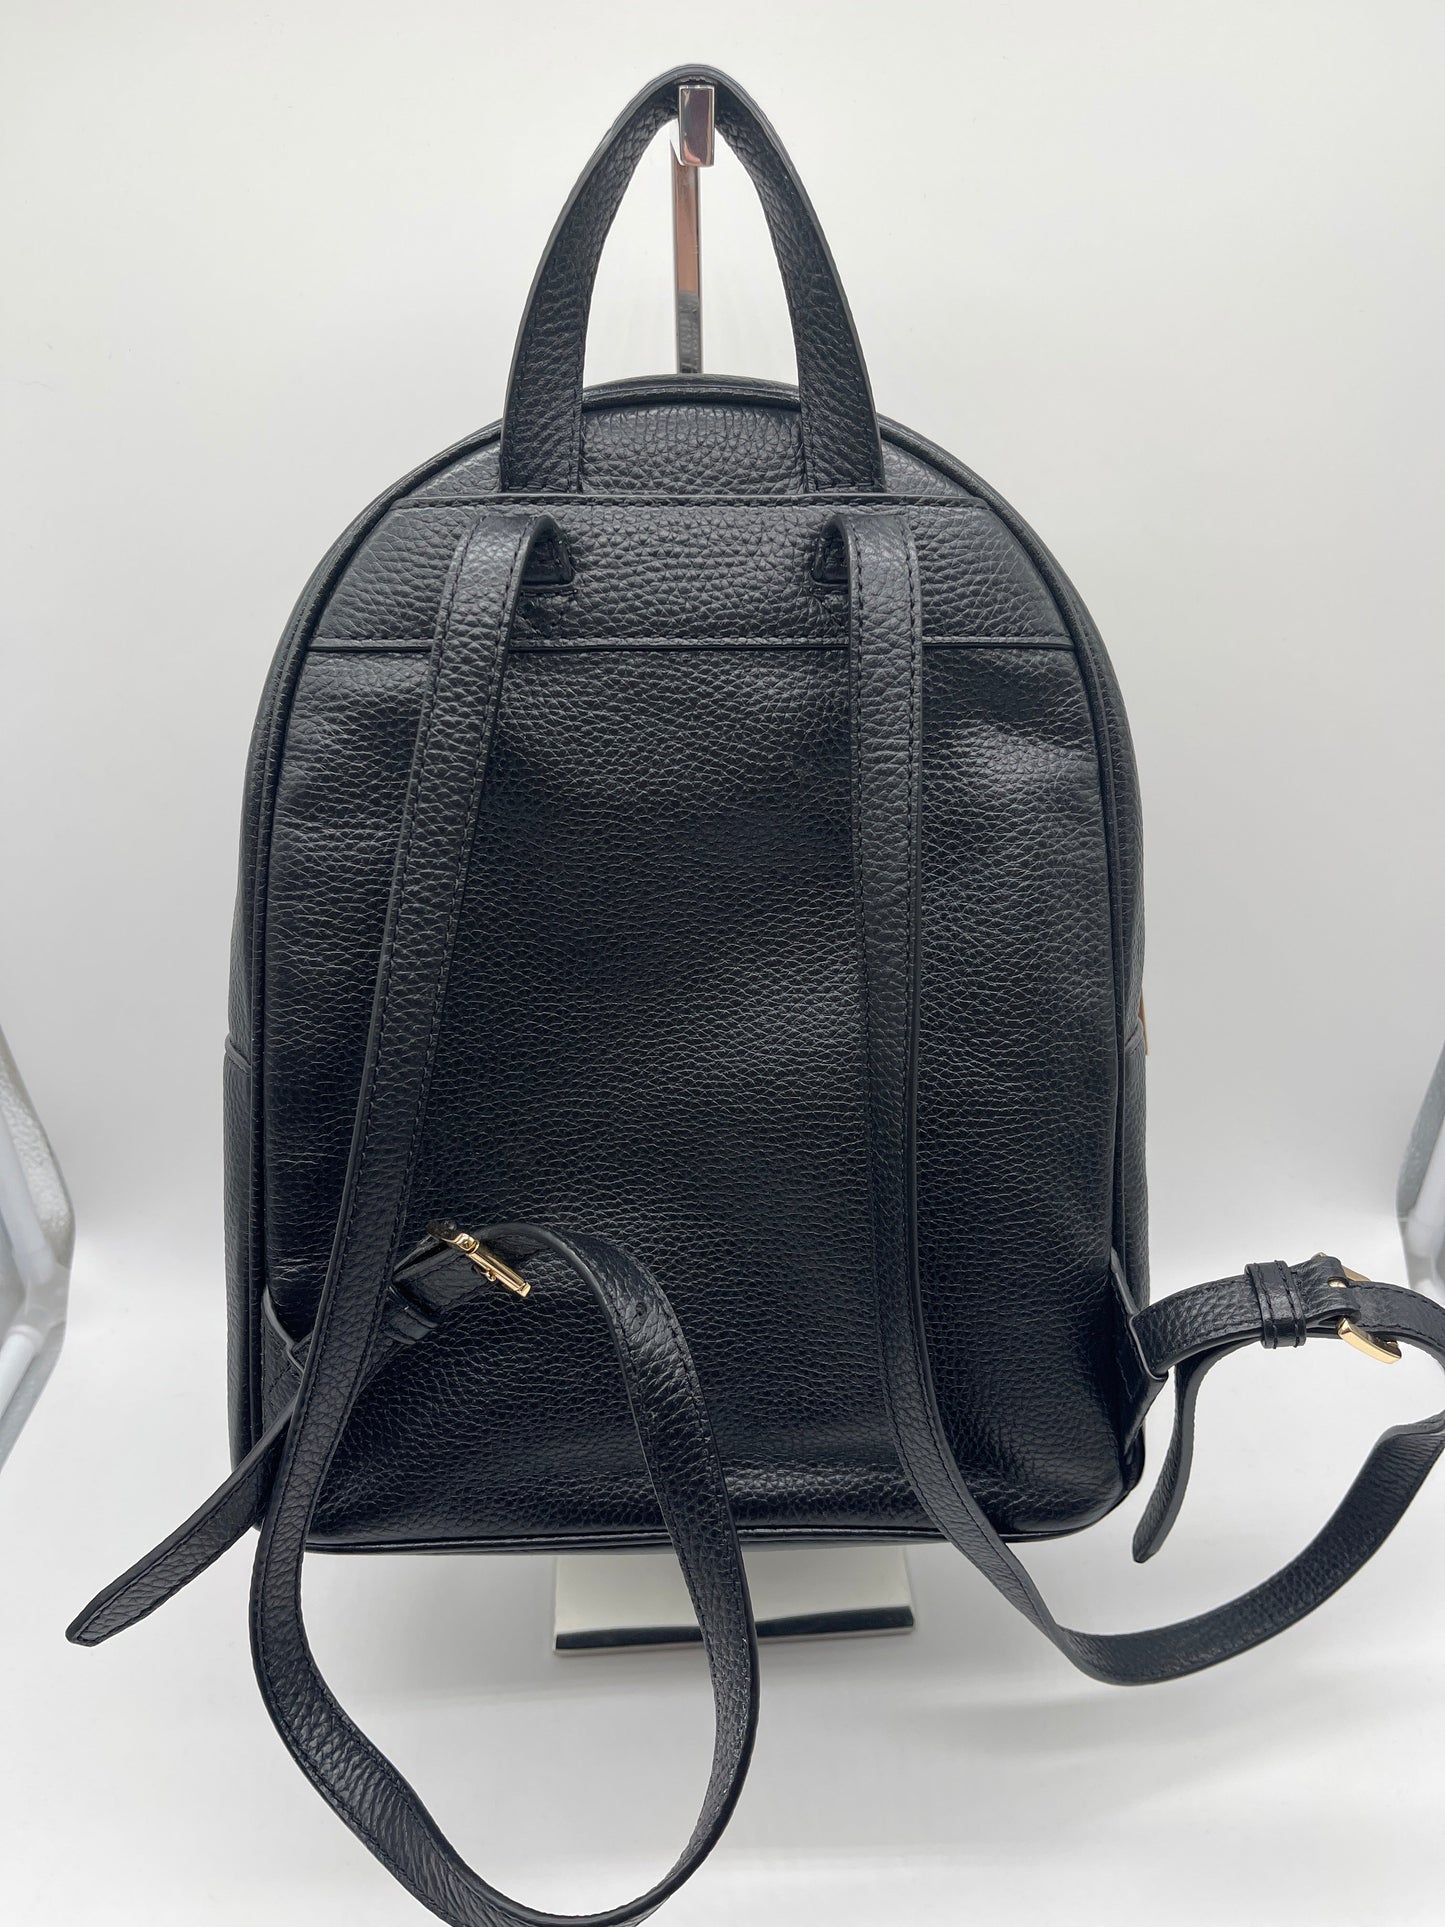 Backpack Designer Michael Kors, Size Medium